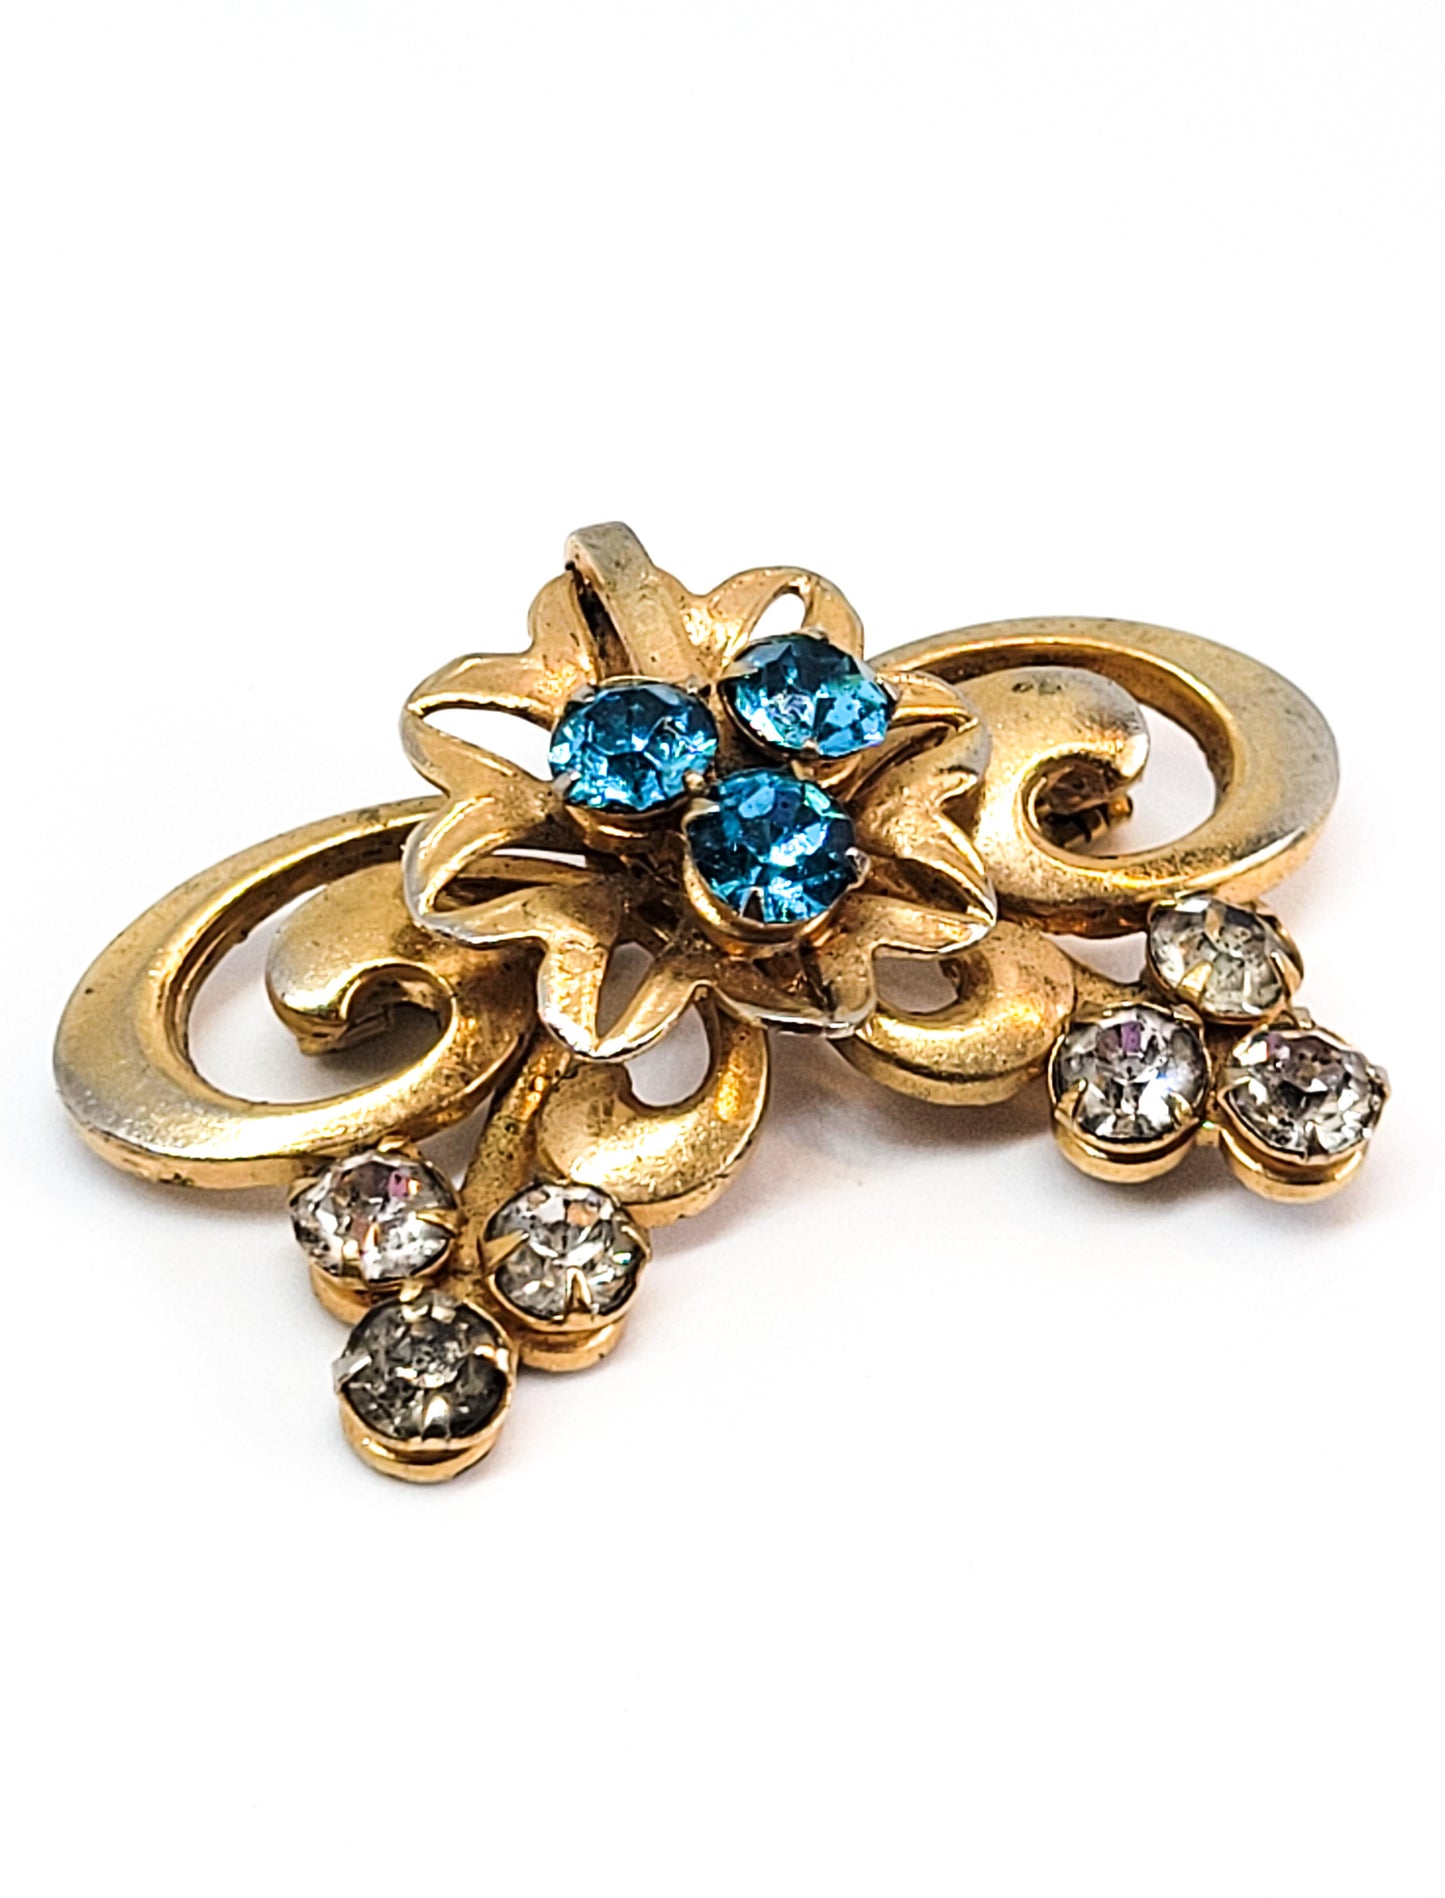 Victorian Revival gold filled aqua blue rhinestone vintage brooch pin mid century